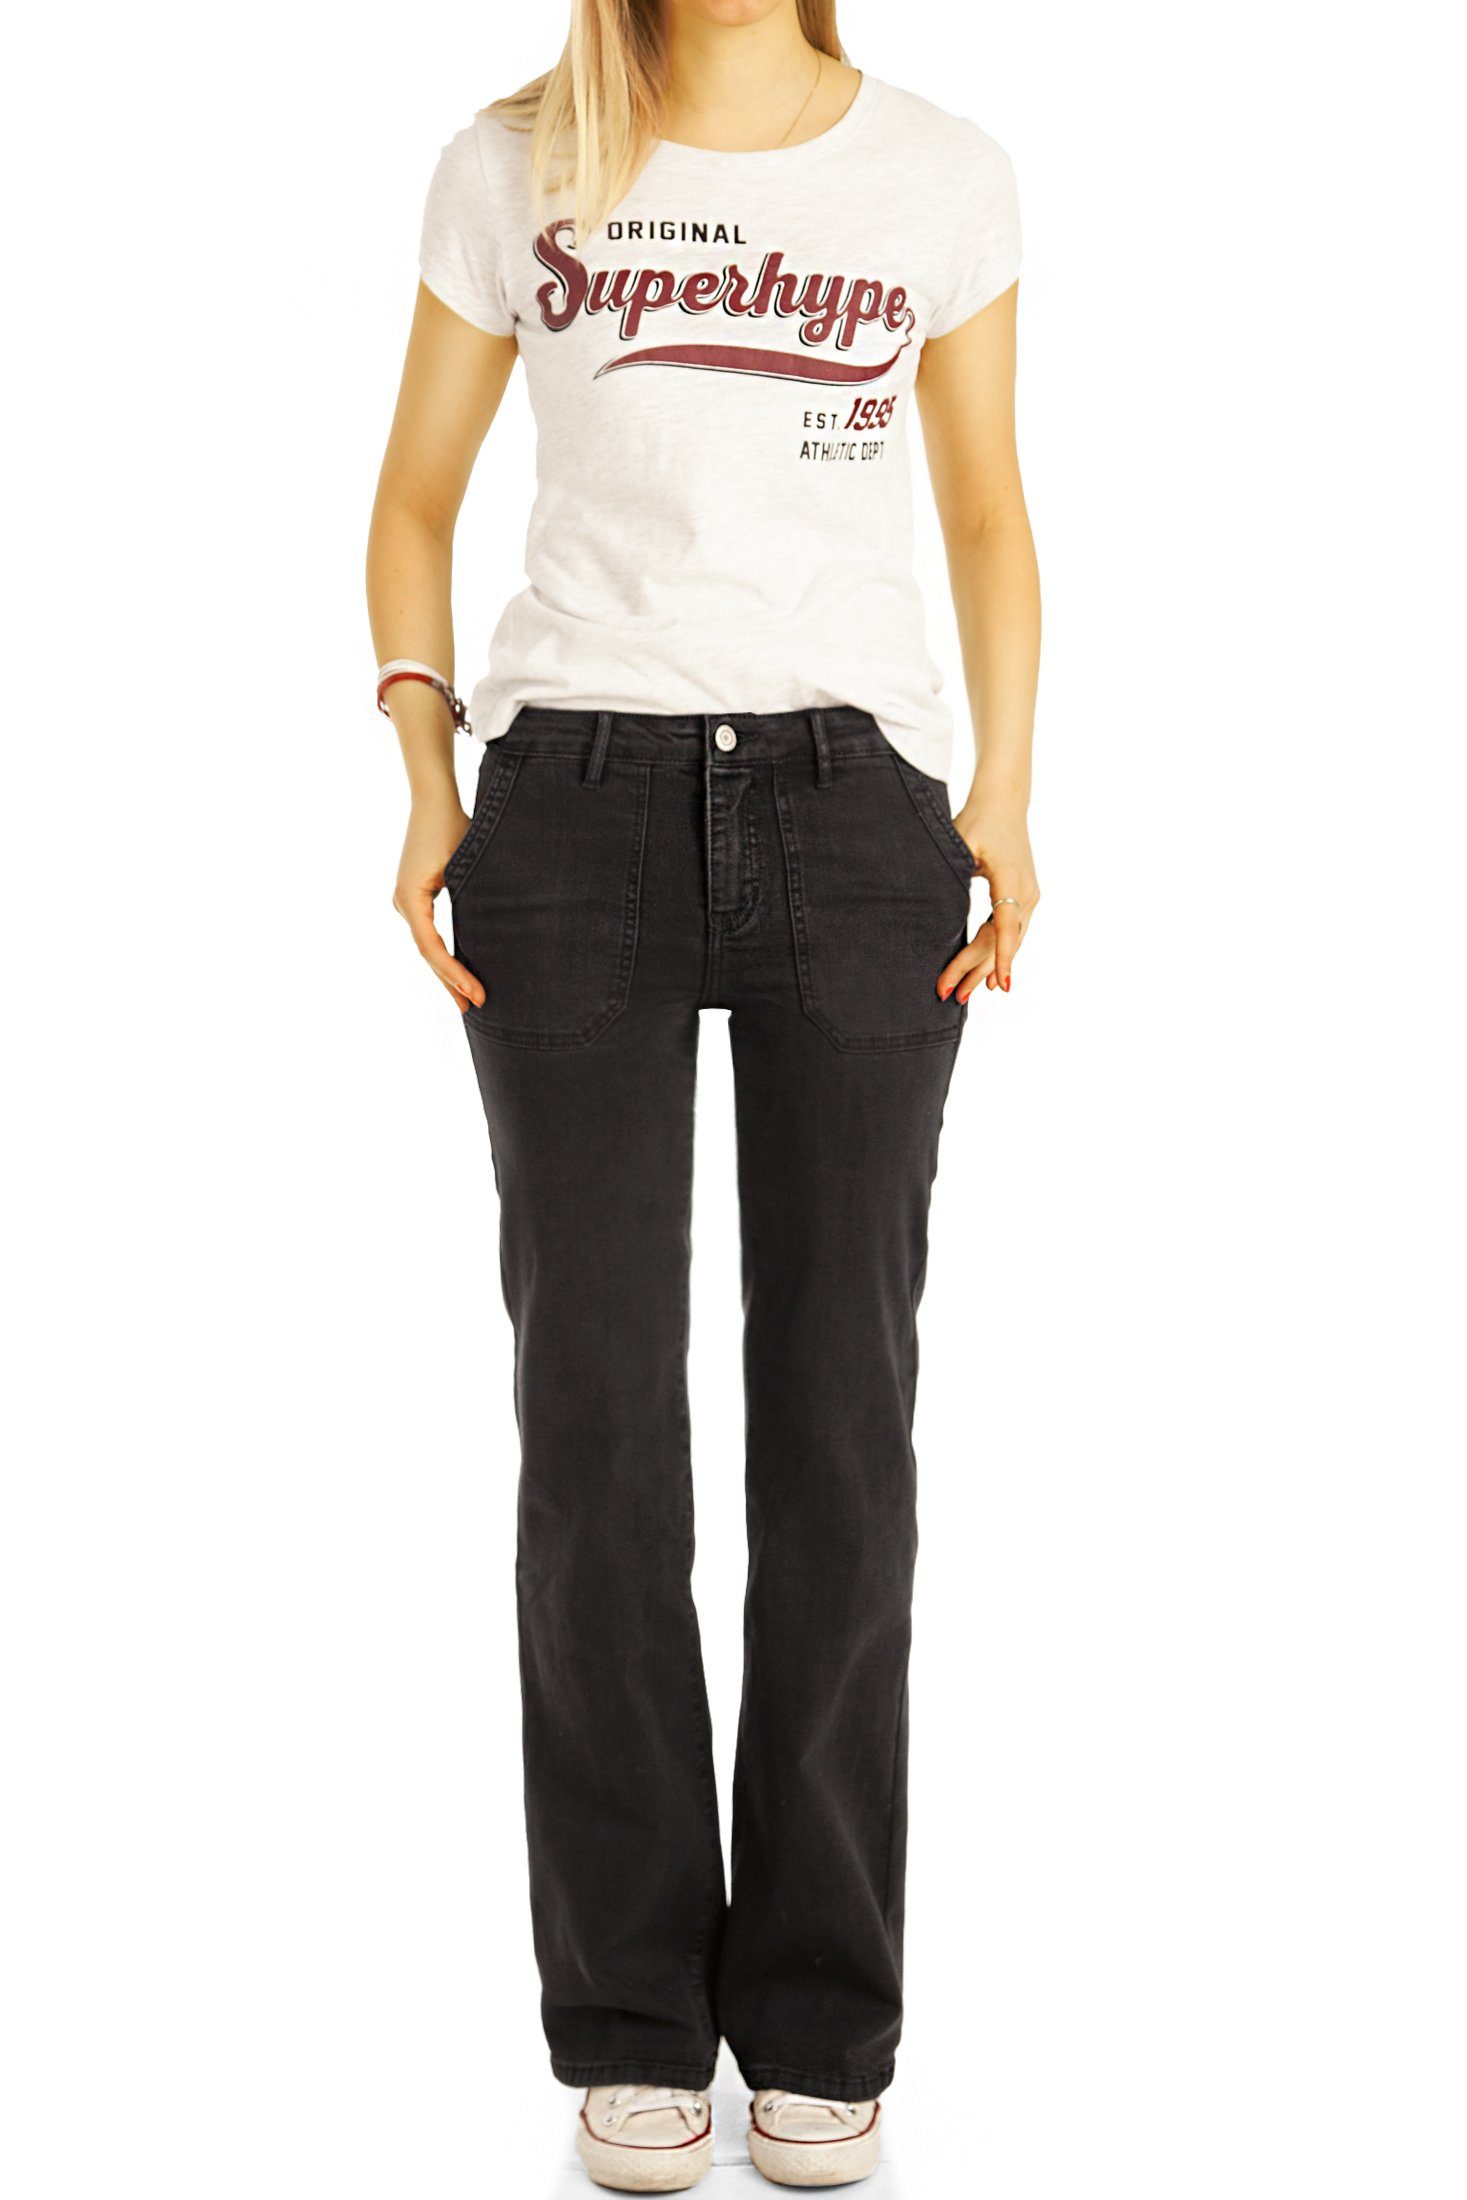 be Passform hellblau styled Bootcut medium Jeans, - Damen Stretch-Anteil, - waist j31k mit 5-Pocket-Style straight Bootcut-Jeans Hosen